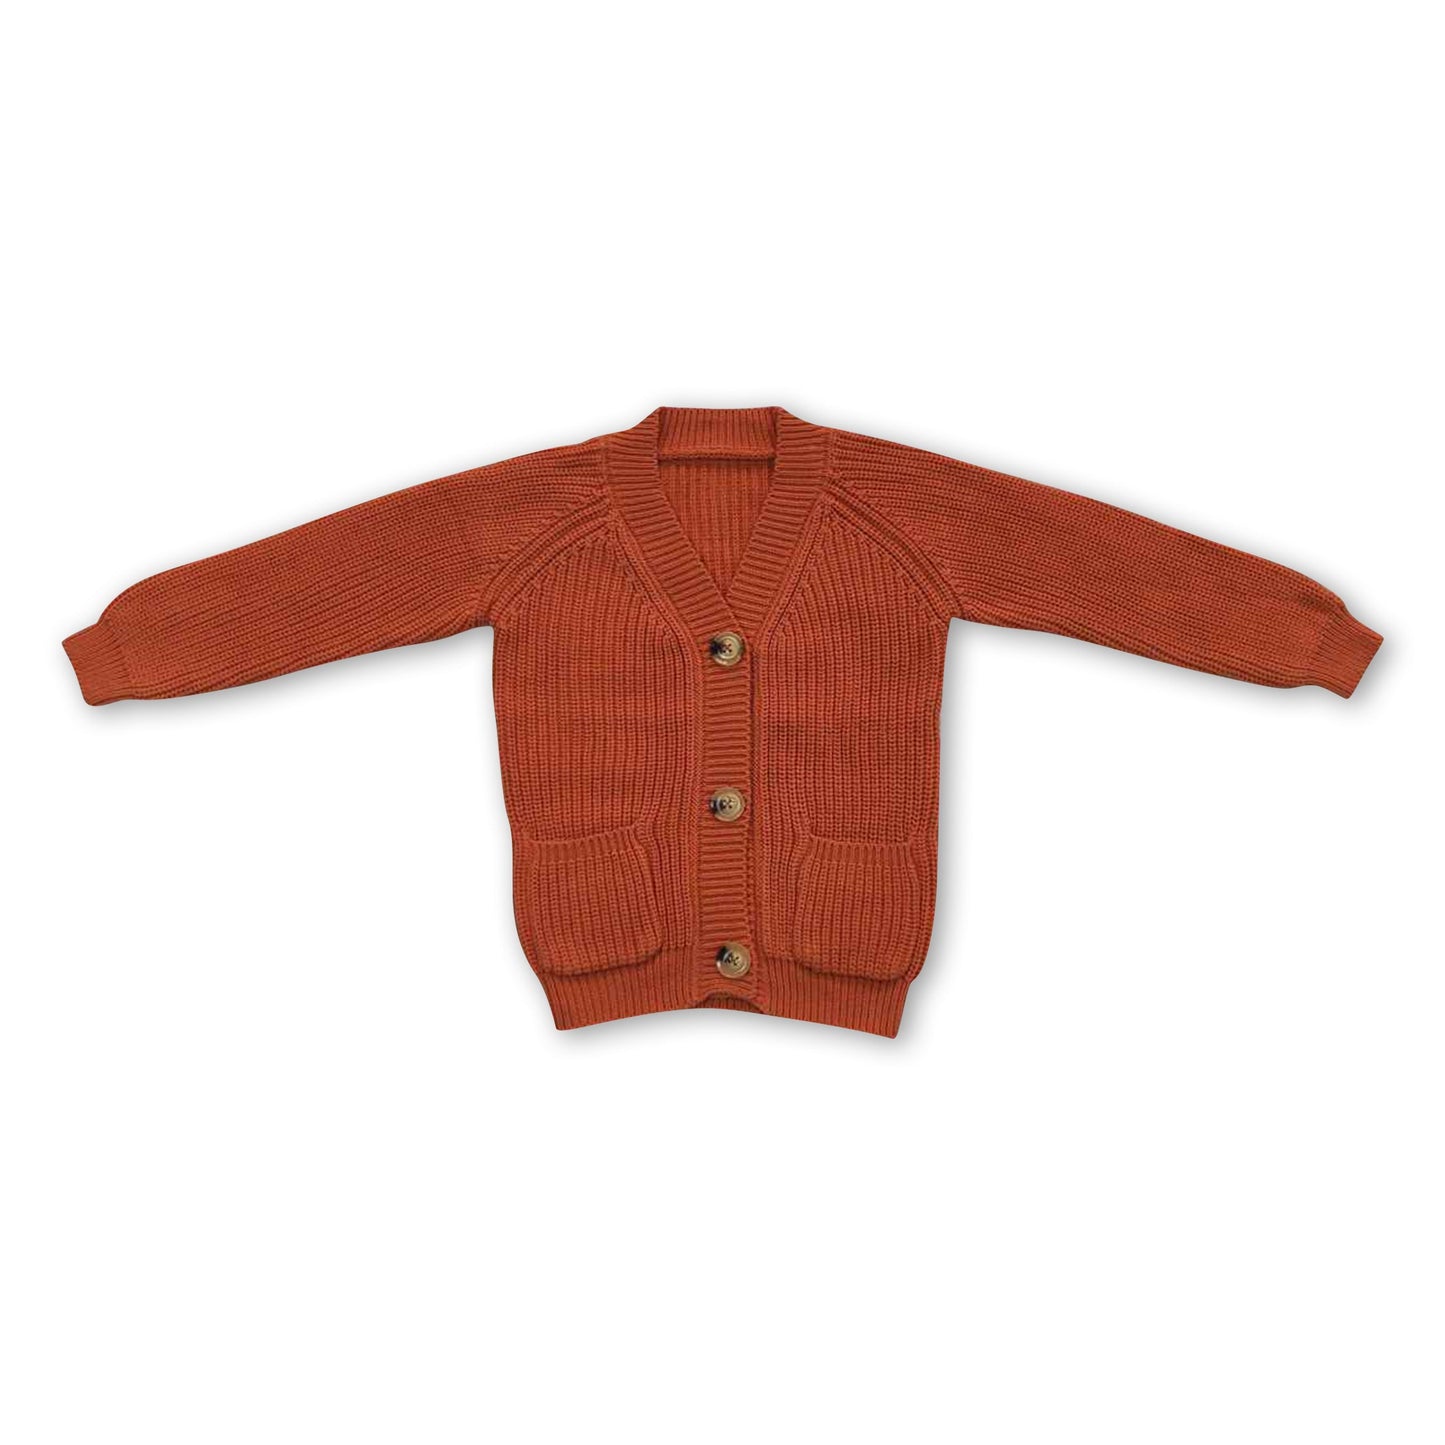 Dark orange pockets cardigan kids girls sweater